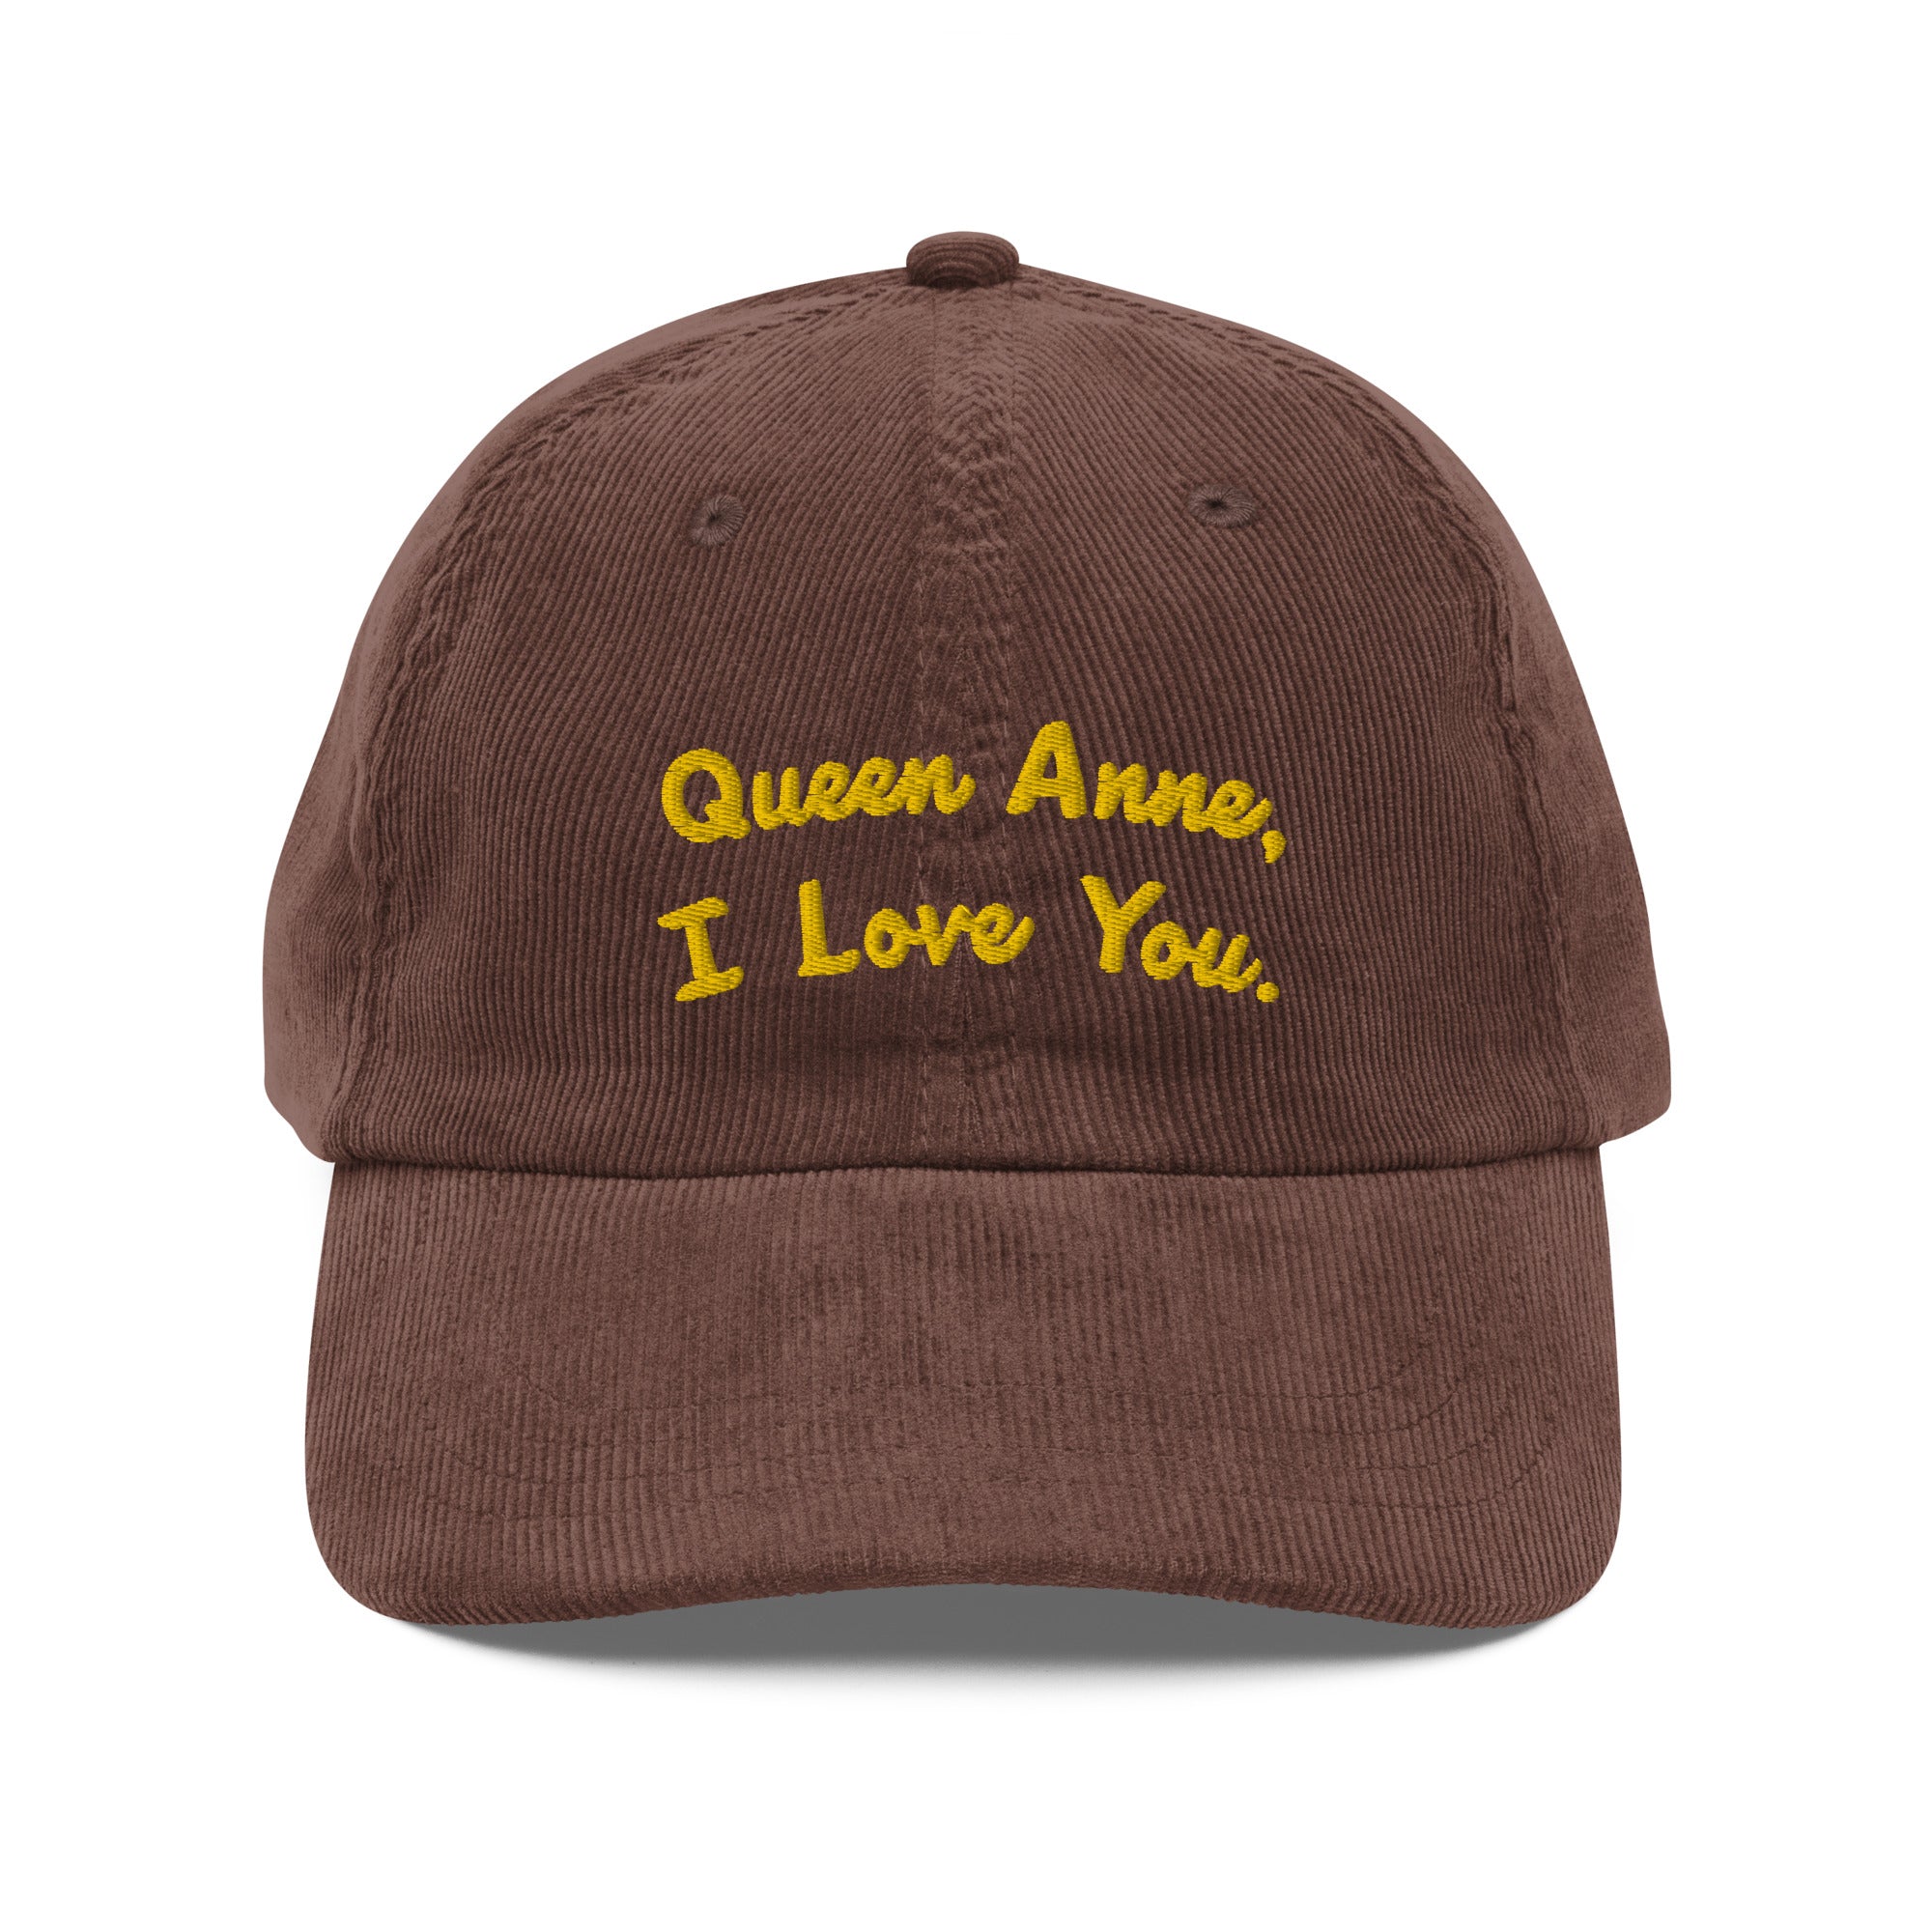 I Love You Corduroy Hat - Queen Anne | Seattle, WA